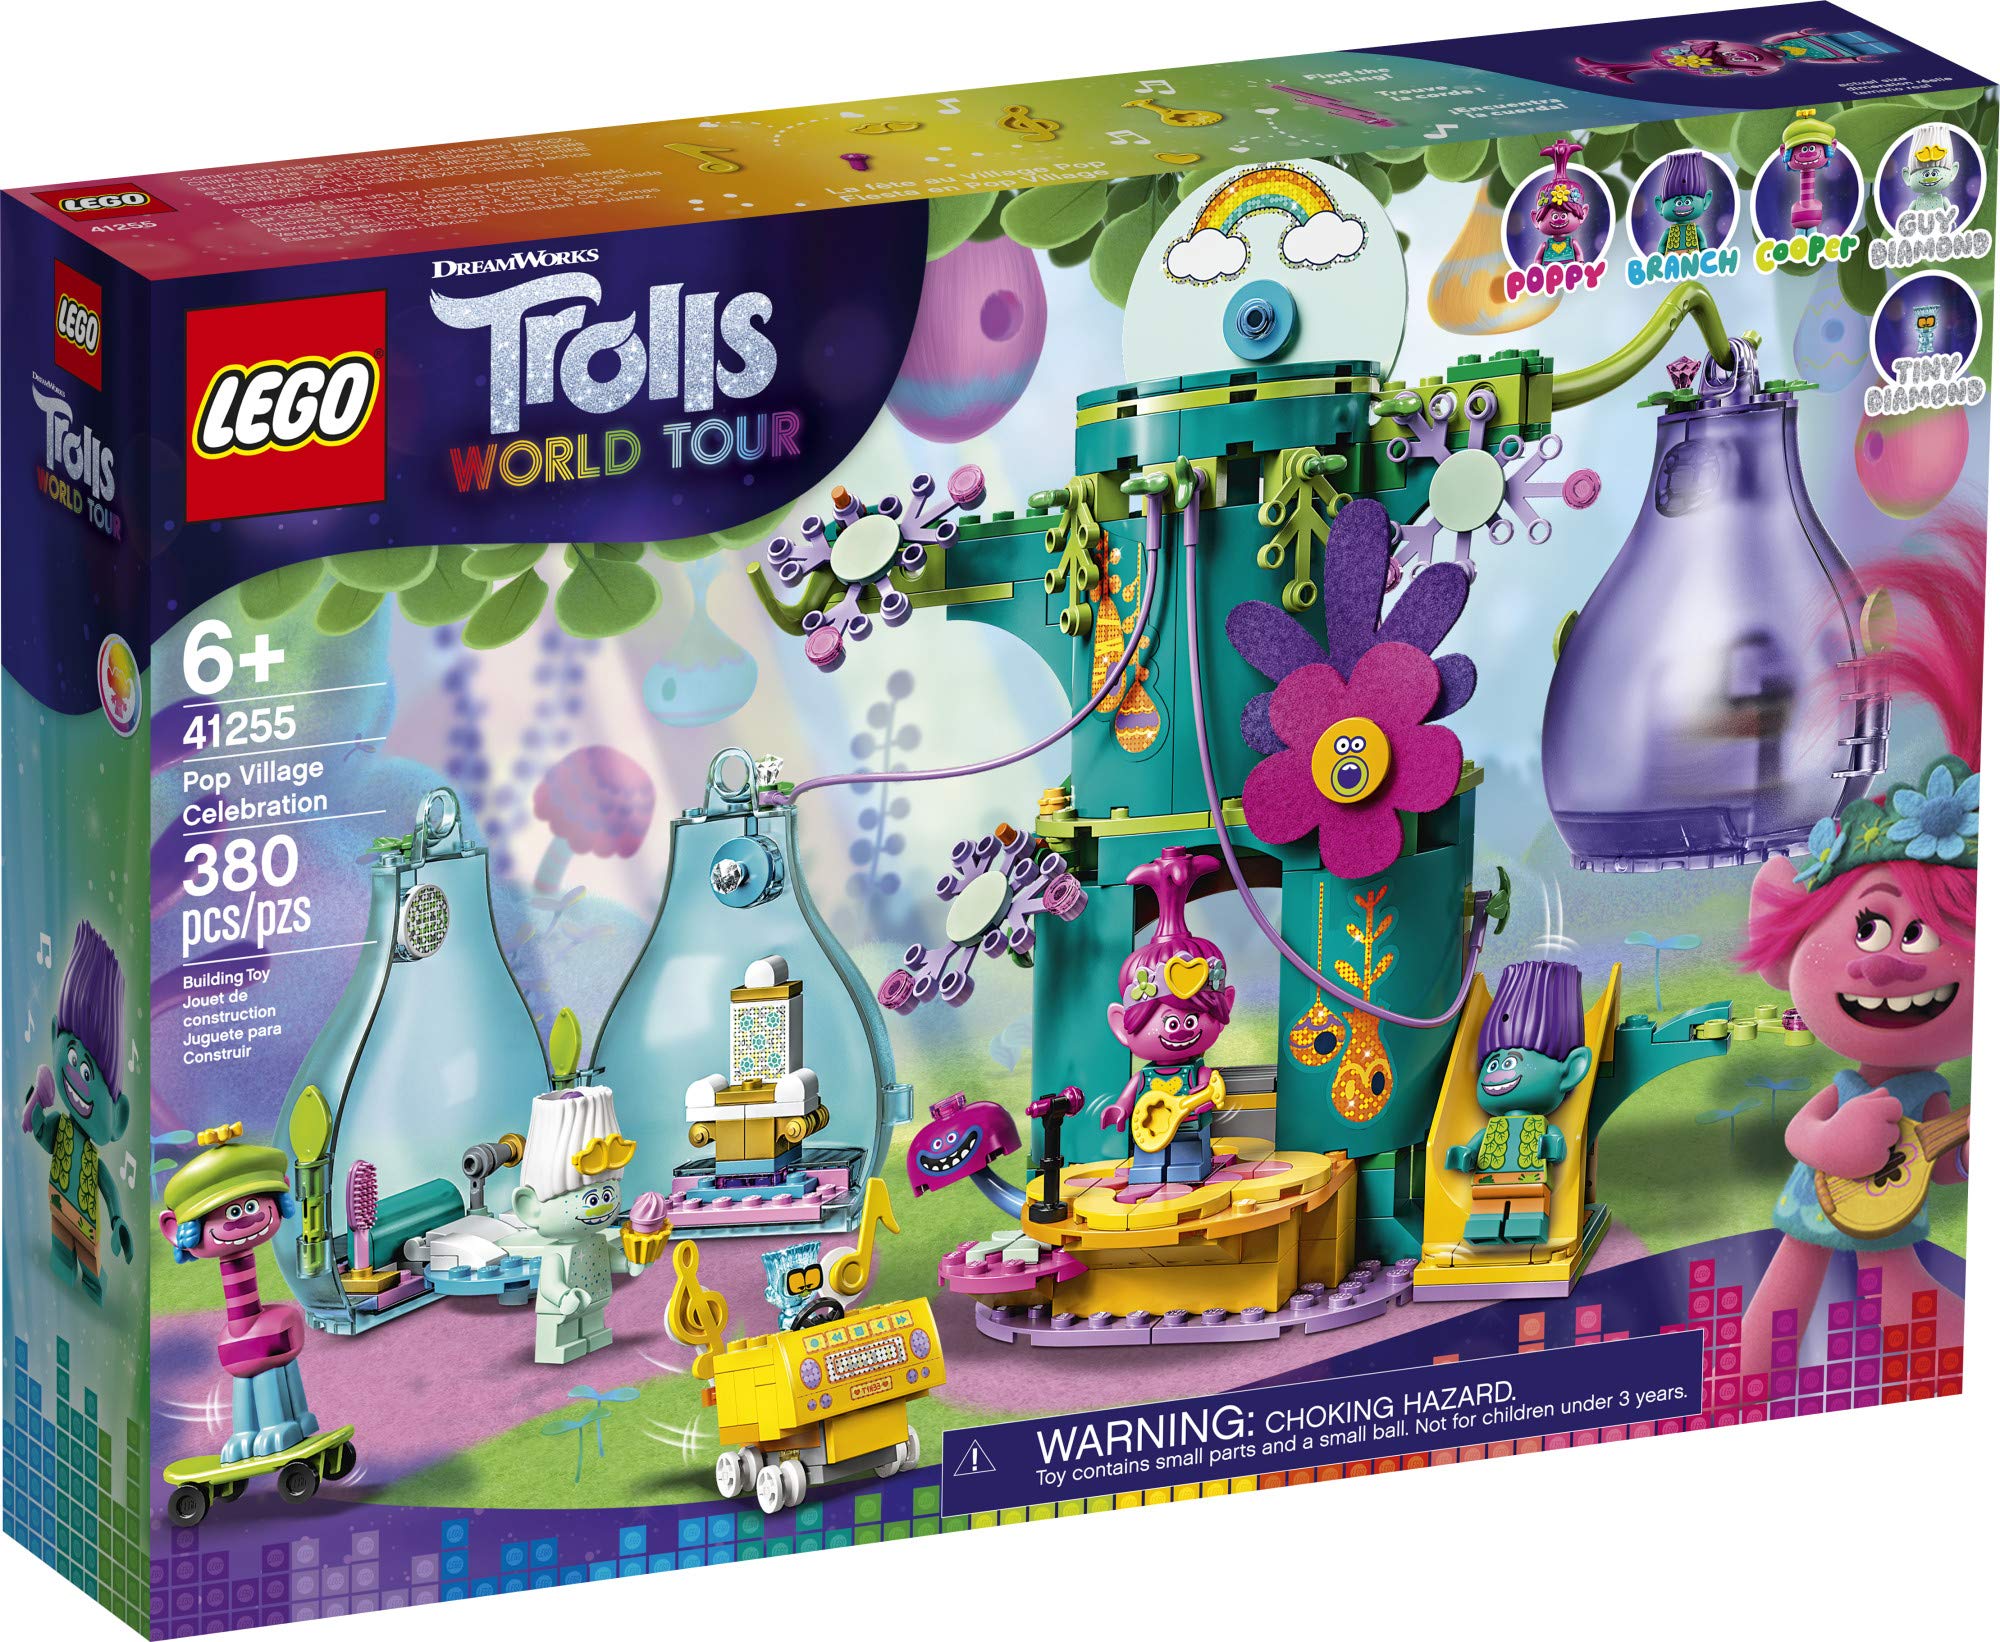 LEGO Trolls World Tour Pop Village Celebration 41255 Trolls Tree House Building Kit for Kids (380 Pieces)